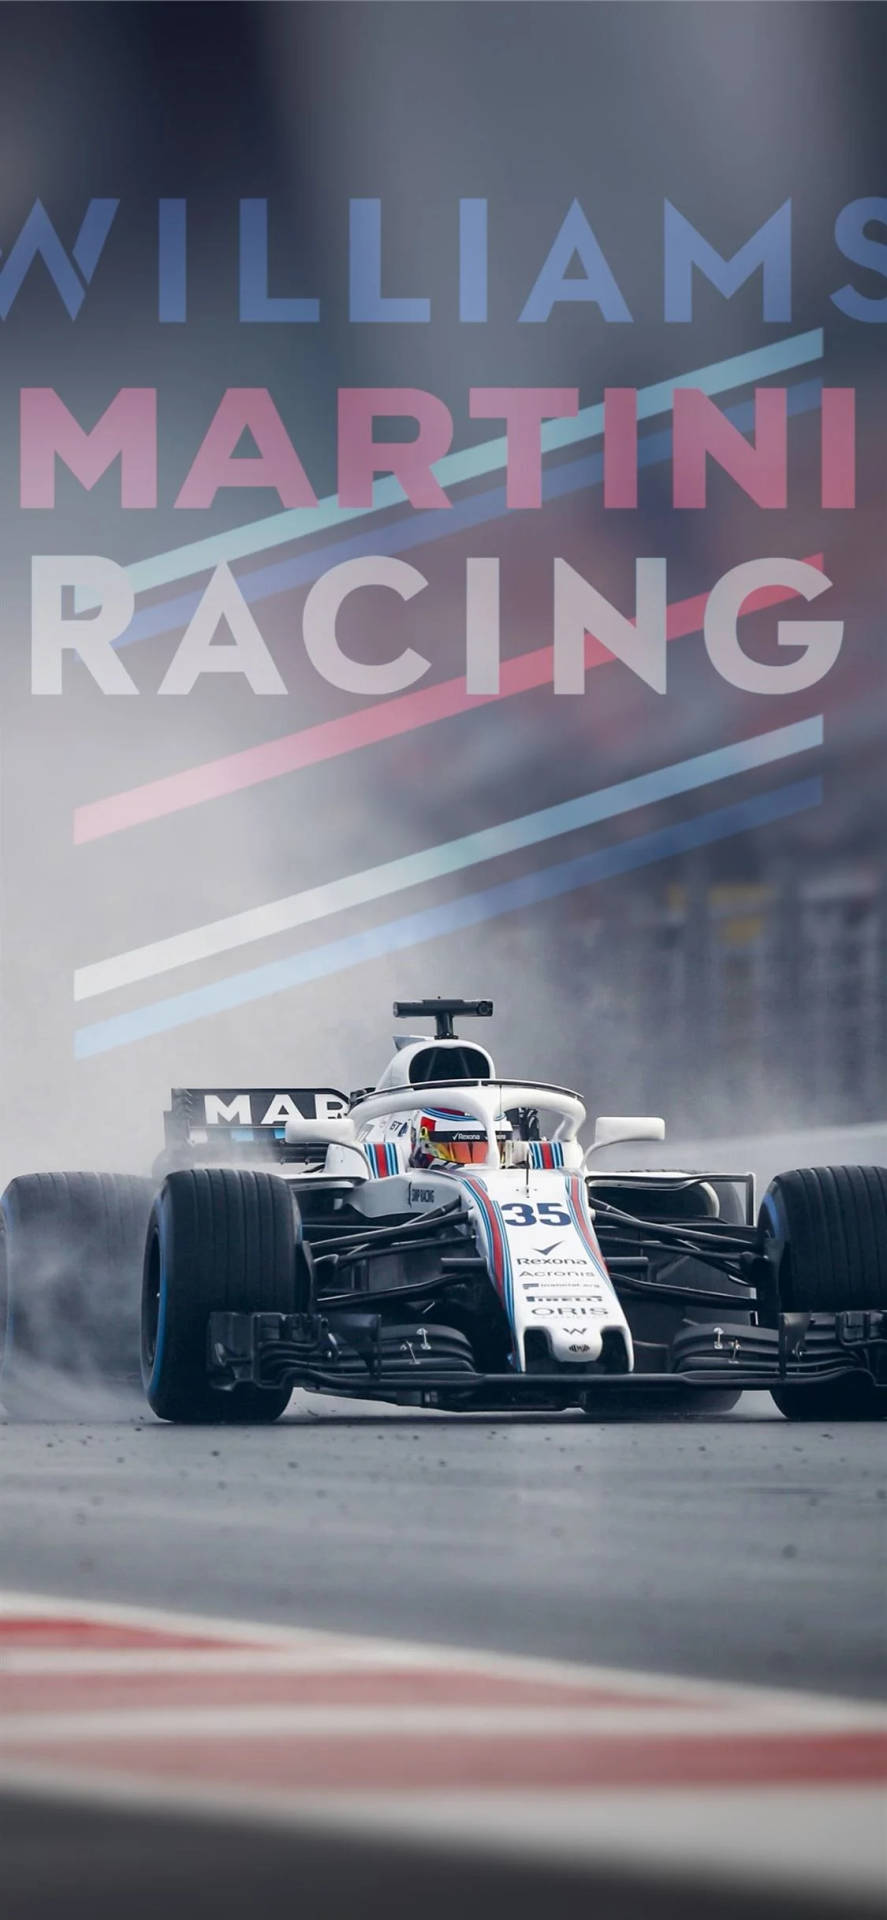 Williamsmartini Racing Wallpaper